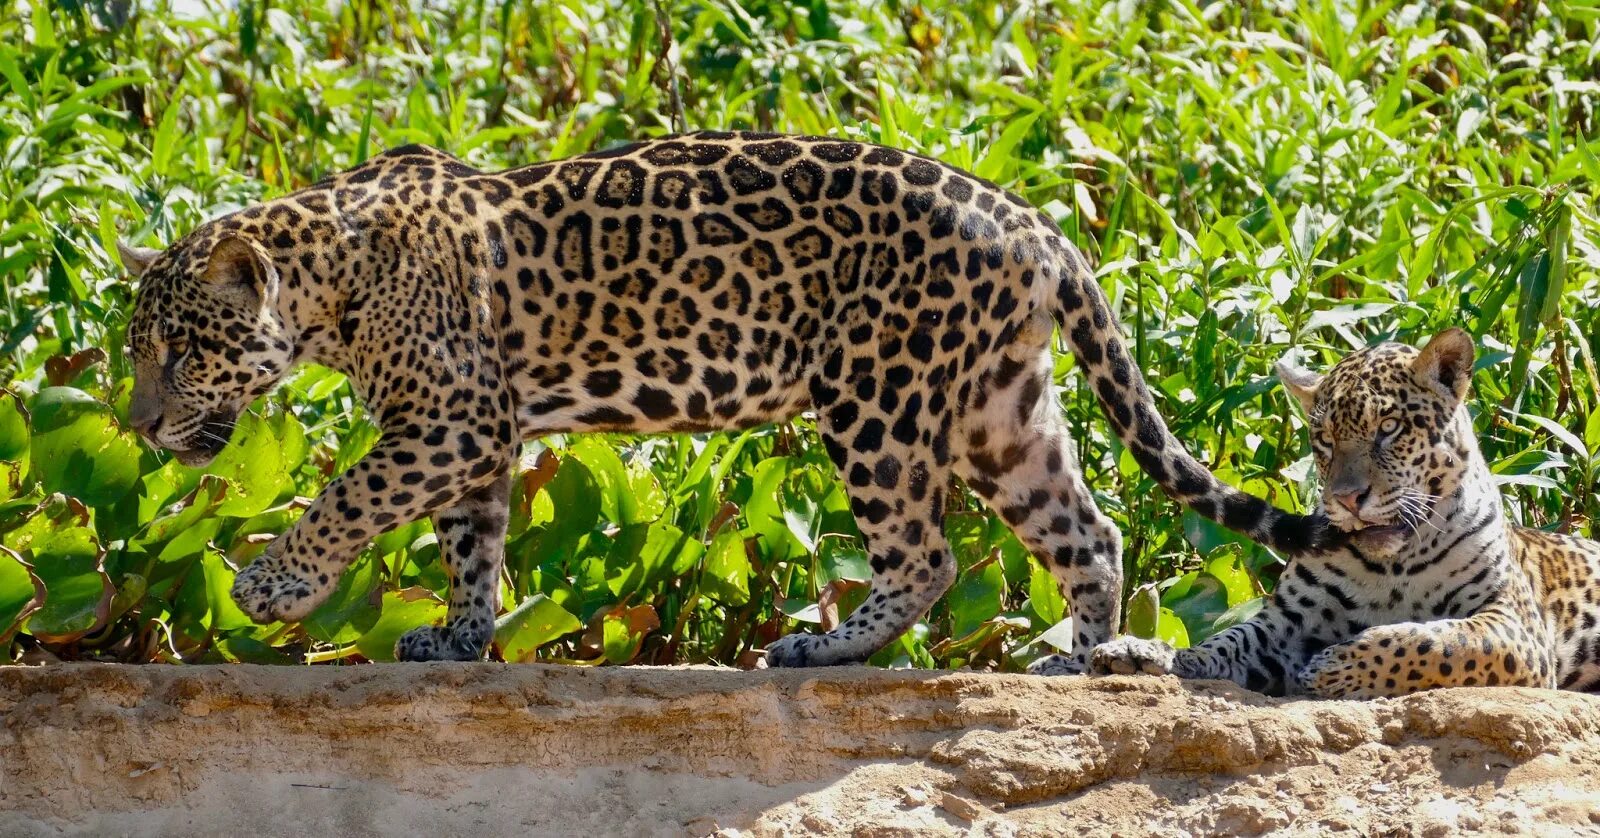 Animal latin. Ягуар Латинской Америки. Животные Латинской Америки. Амазонская кошка. Латинский Ягуар.